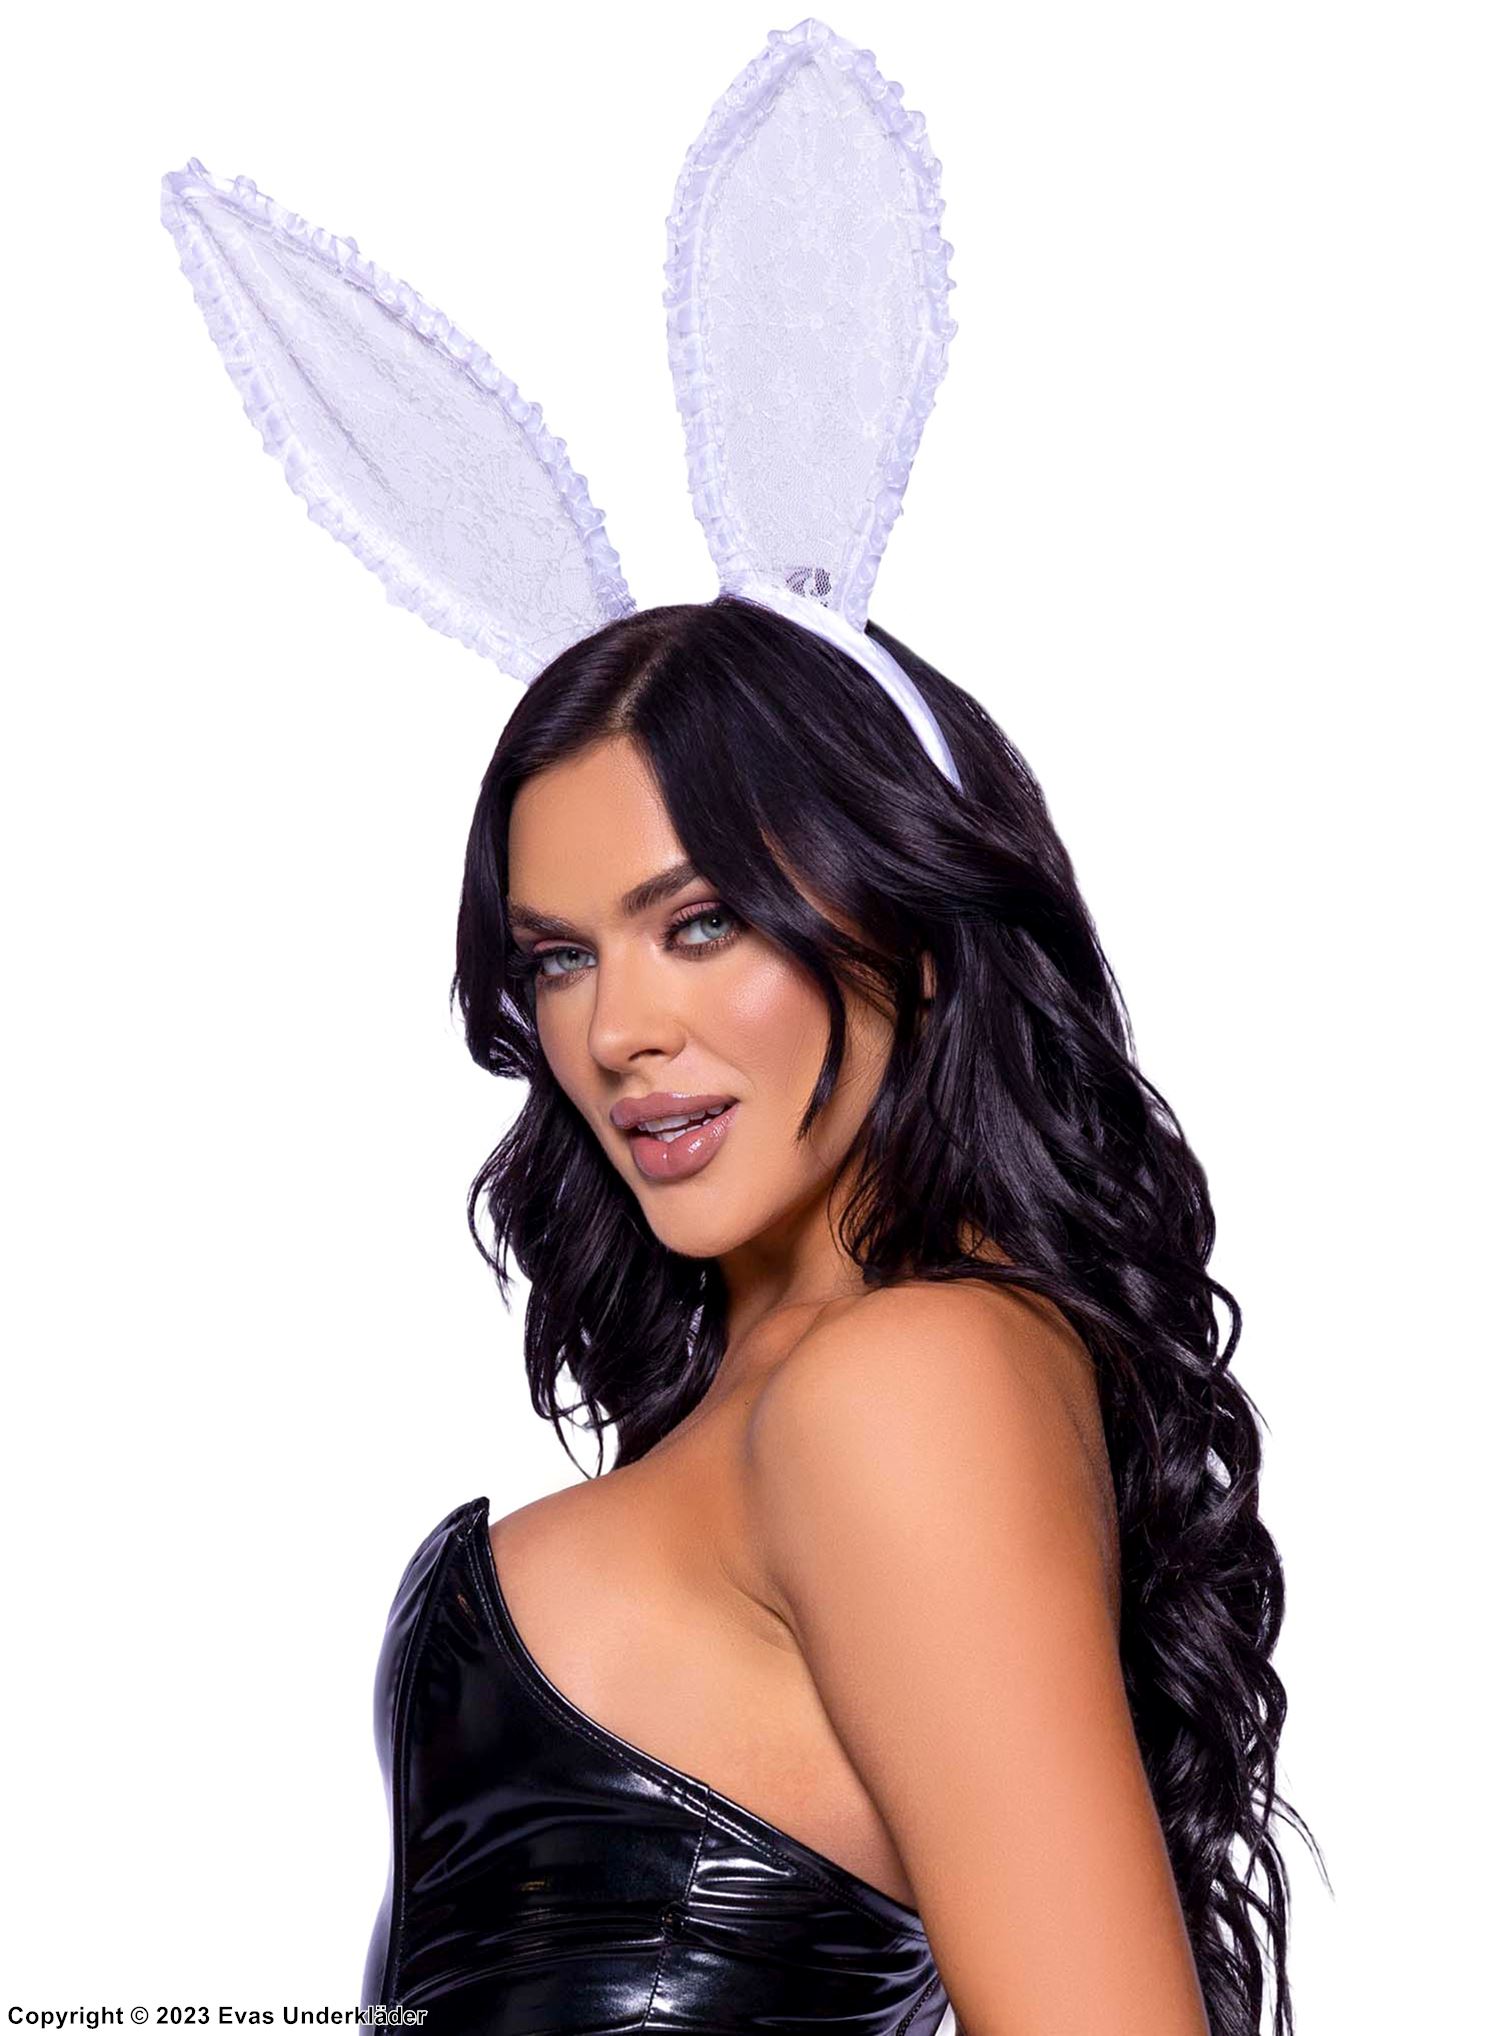 Playboy bunny, costume headgear, floral lace, big ears